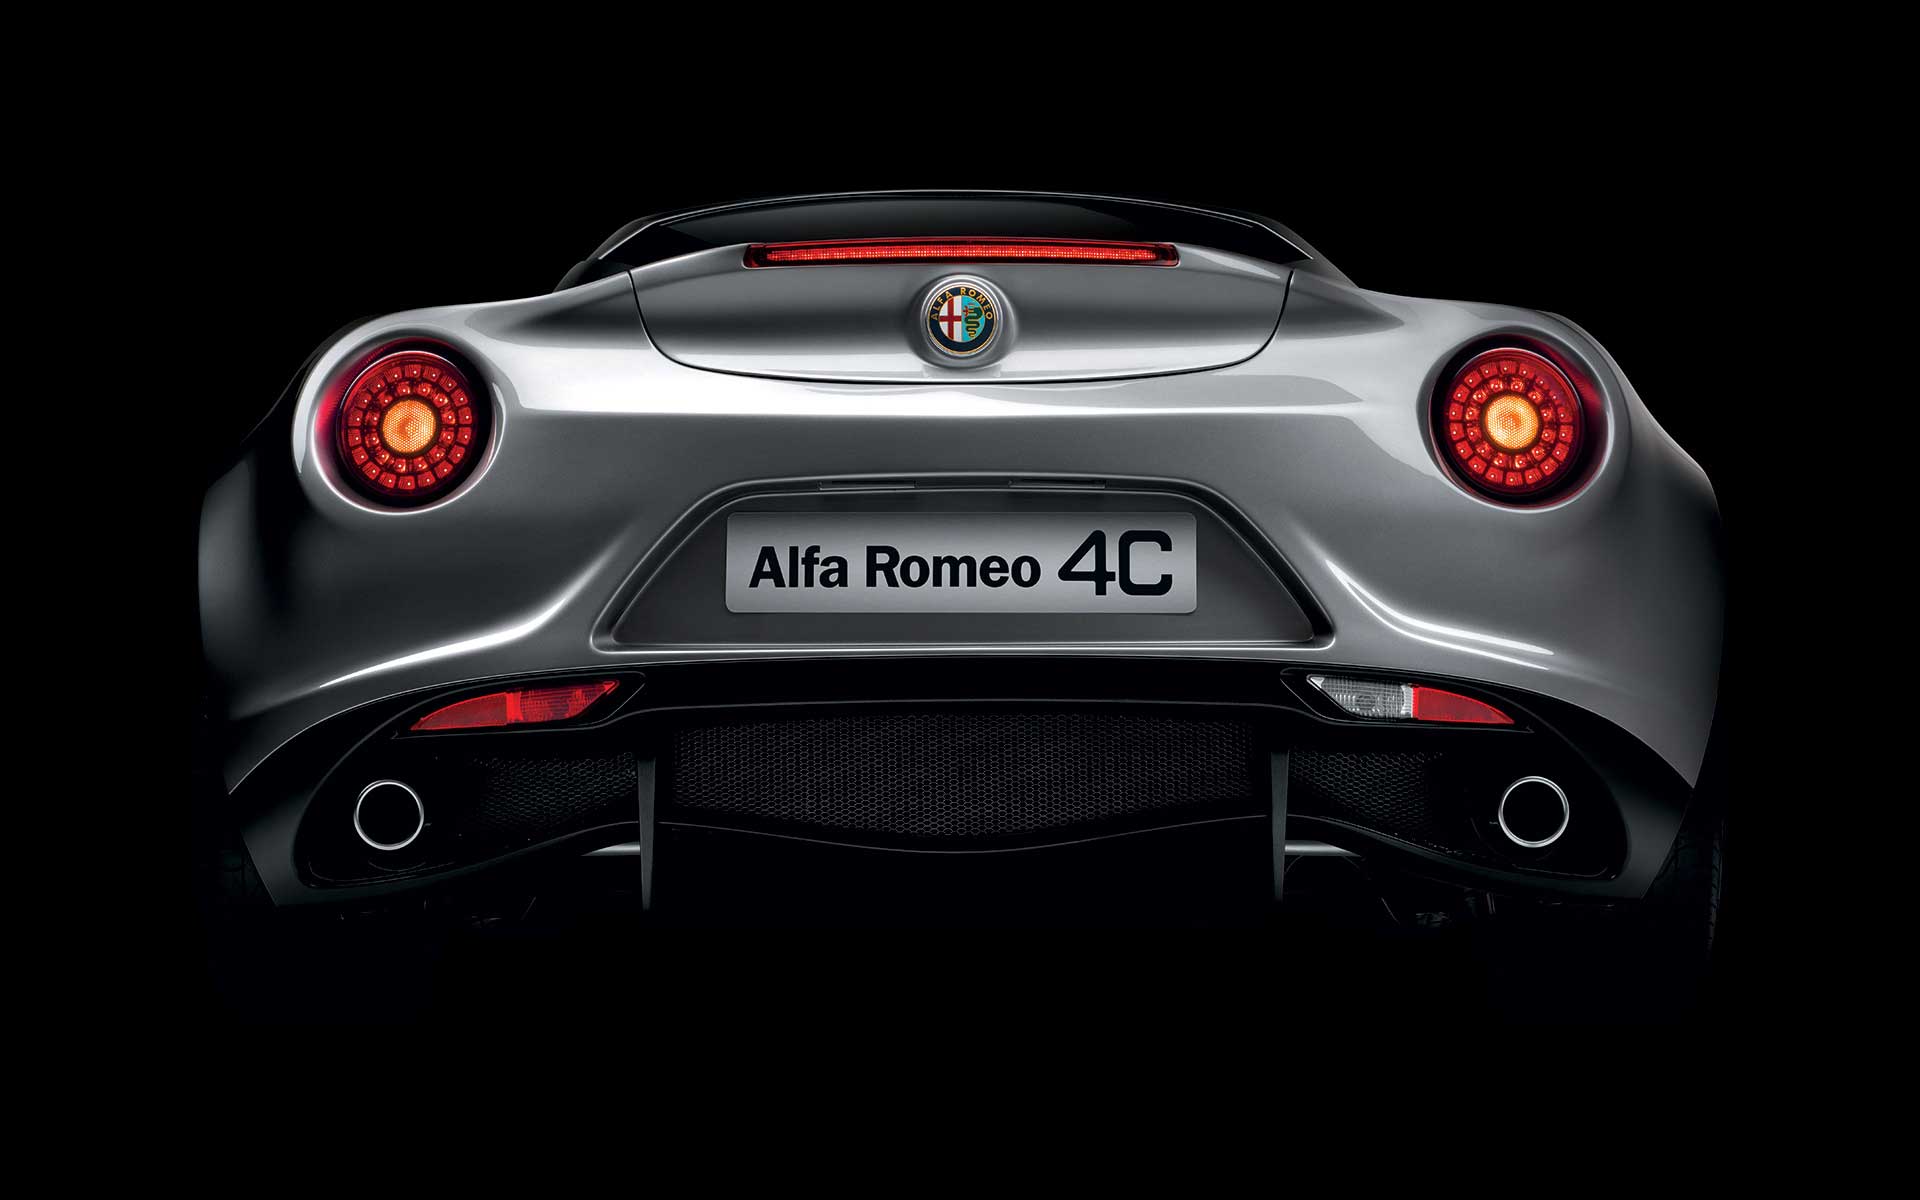 Alfa Romeo 4C 2015 Exterior rear view